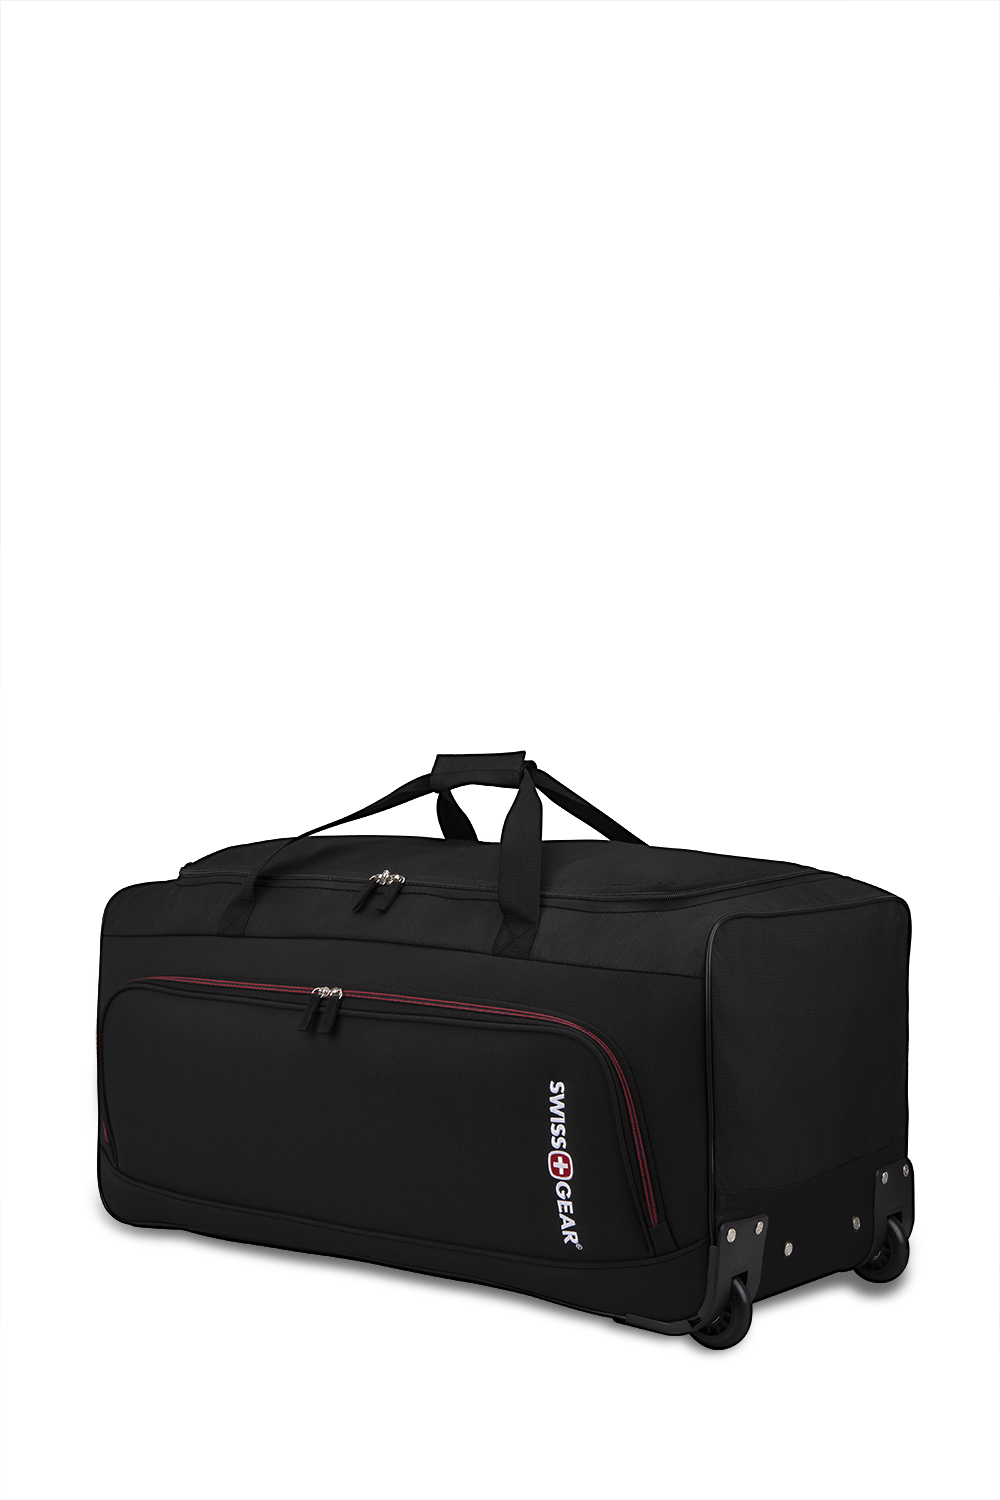 Samsonite Mobile Solution Classic Duffel Business Bag, Color: Black -  JCPenney